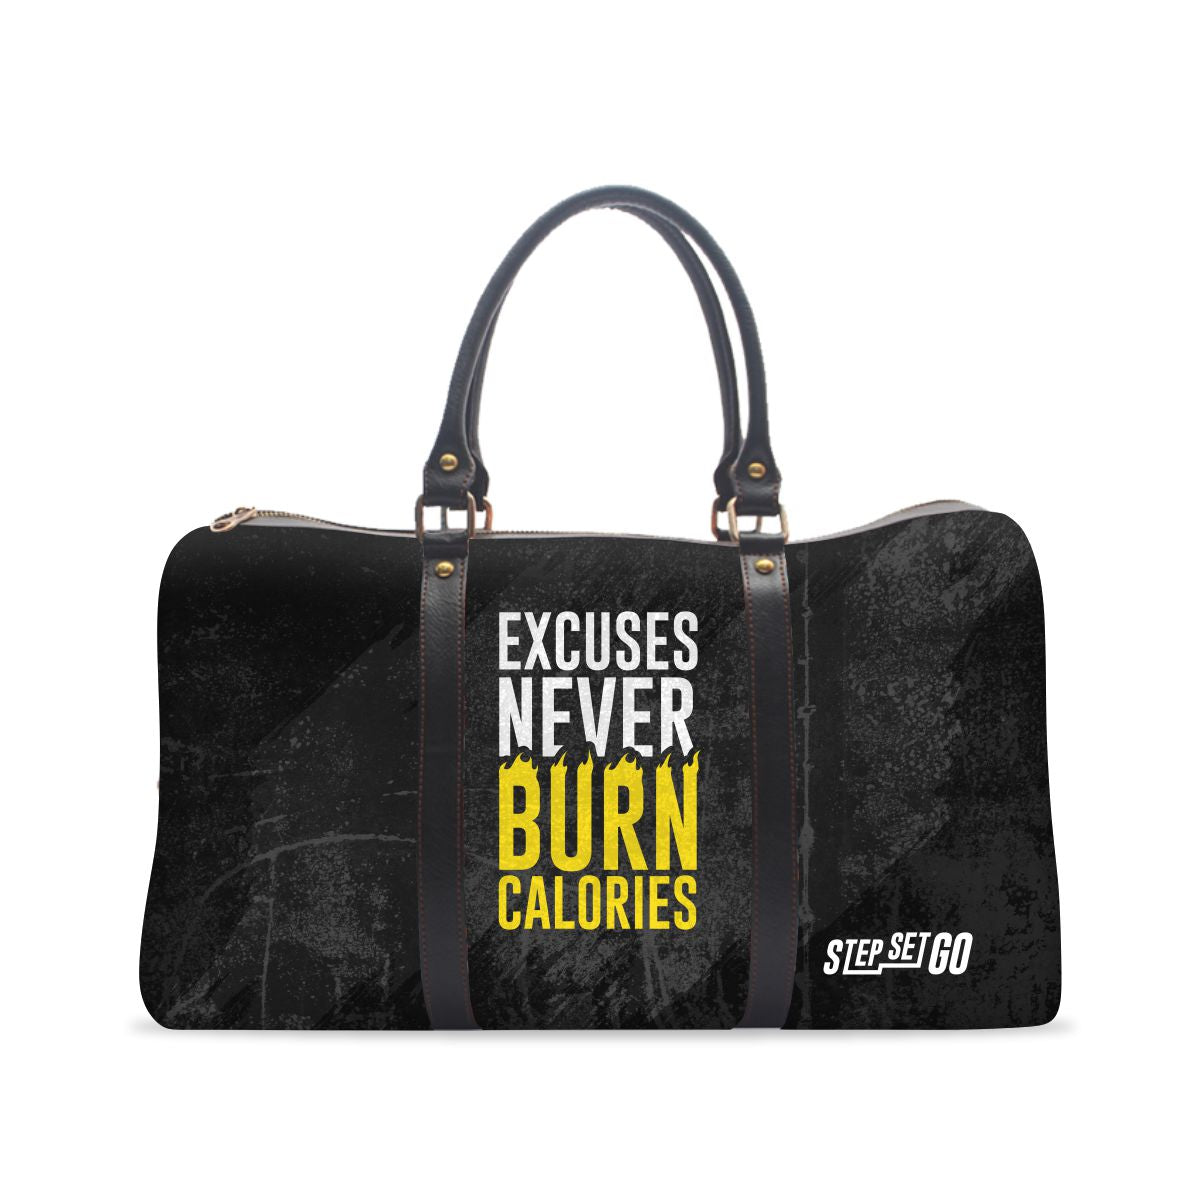 StepSetGo - Burn Calories Gym Bag